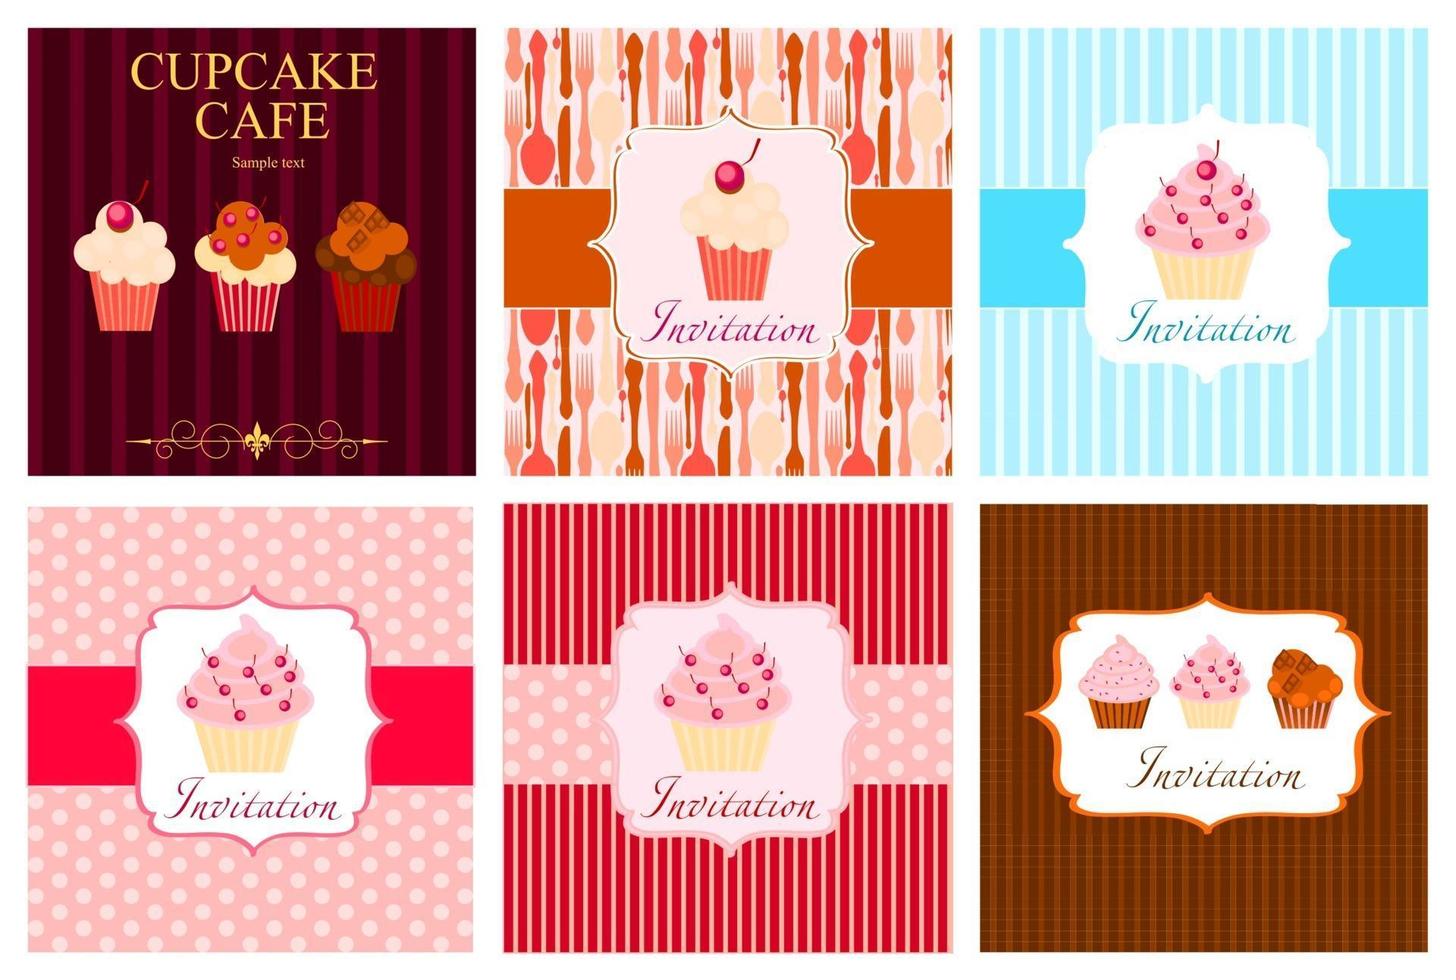 The concept of cupcakes cafe menu. vector